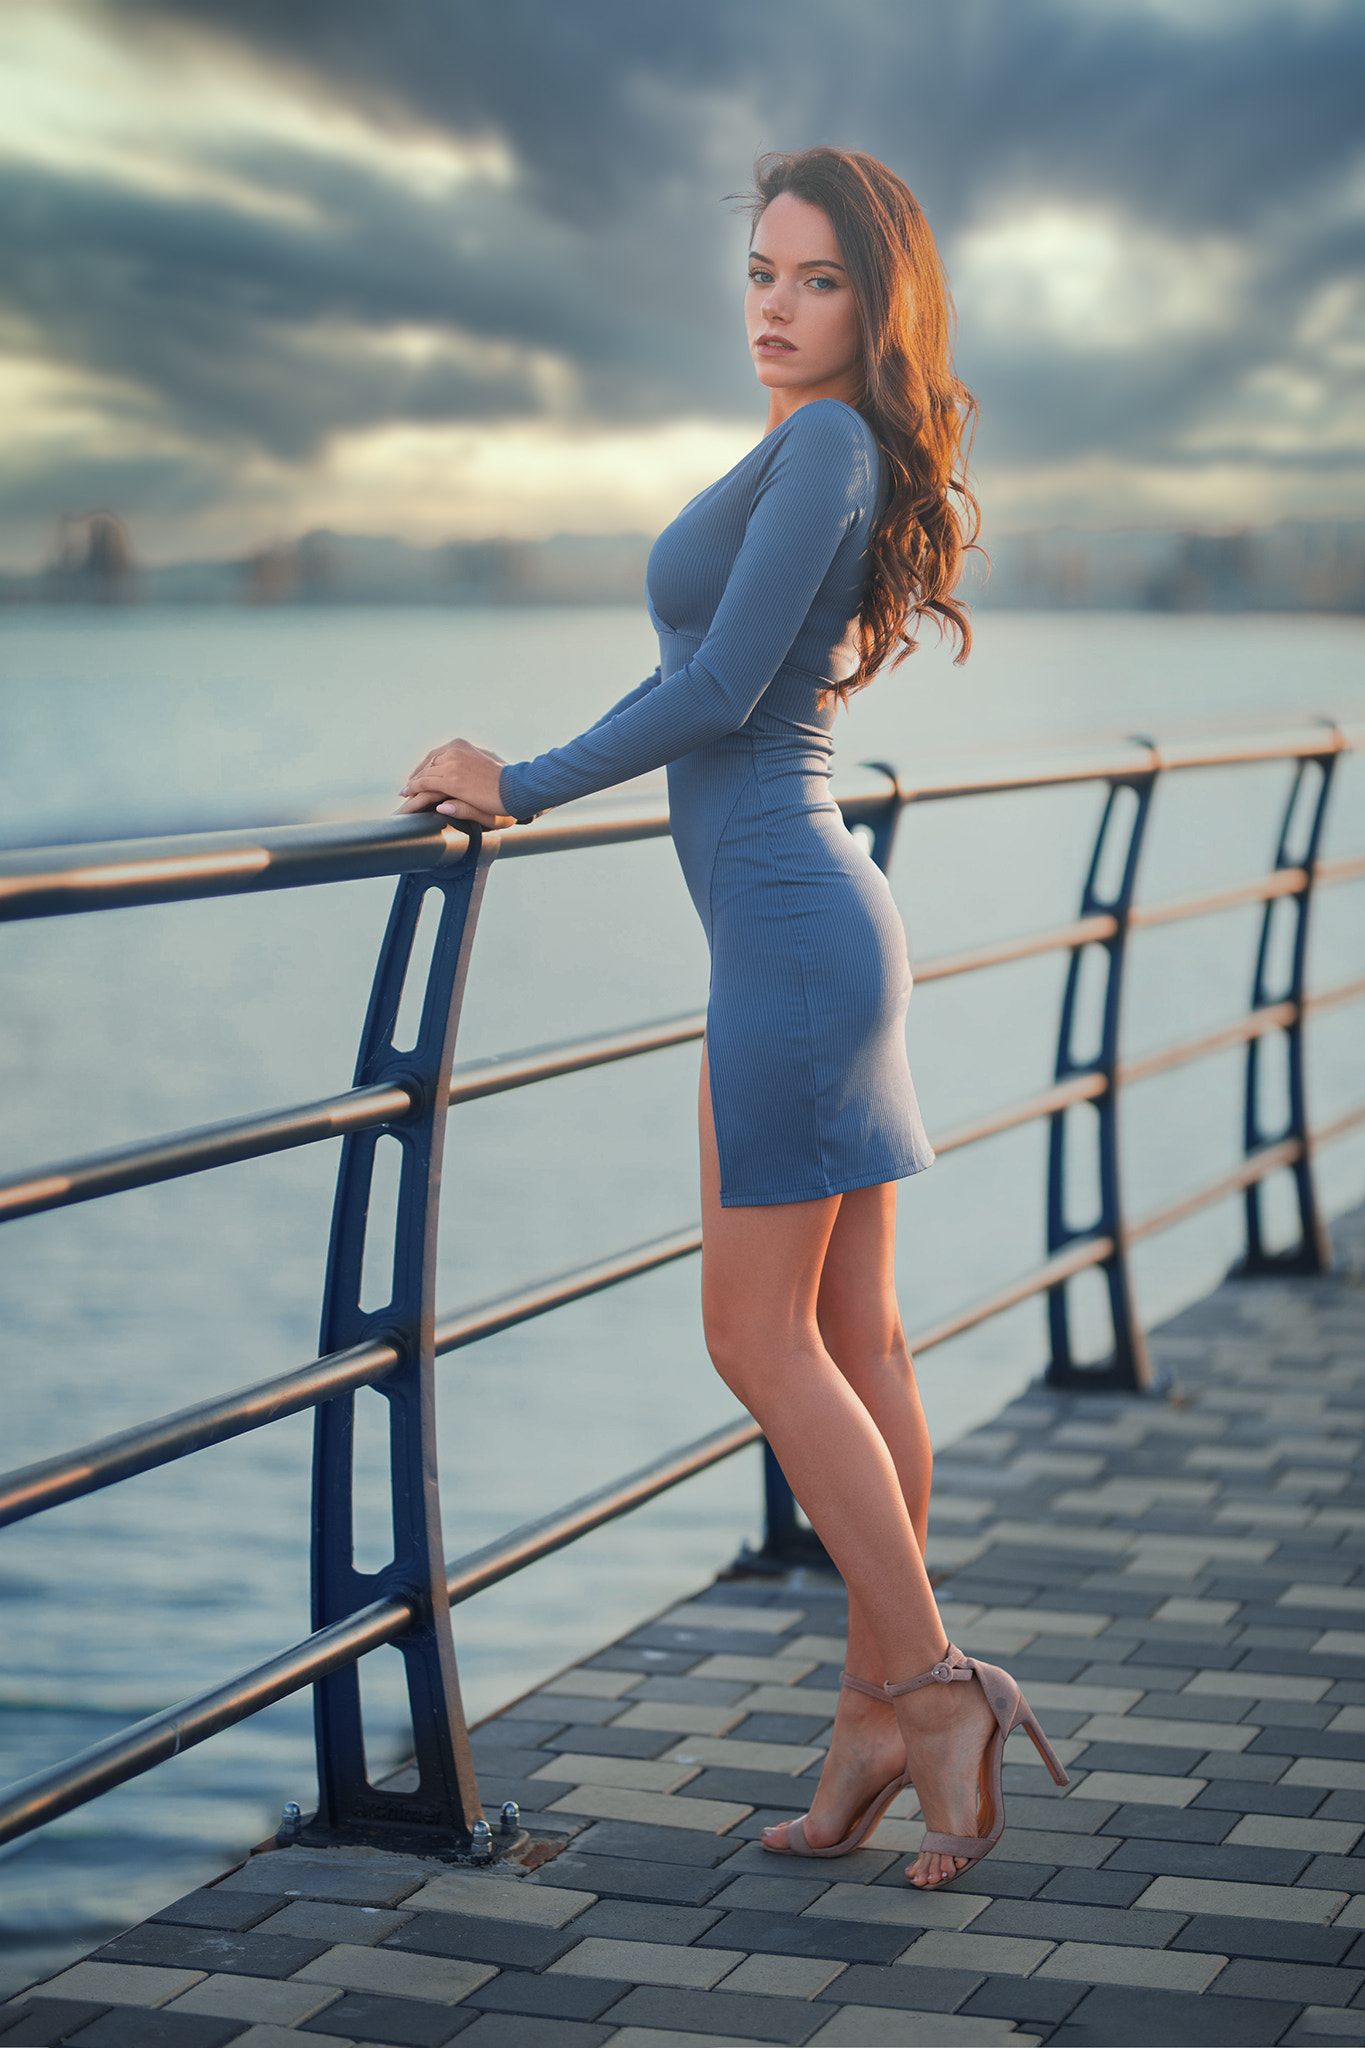 Dmitry Shulgin Women Brunette Long Hair Wavy Hair Dress Blue Clothing Shoes High Heels Fence Water O 1365x2048